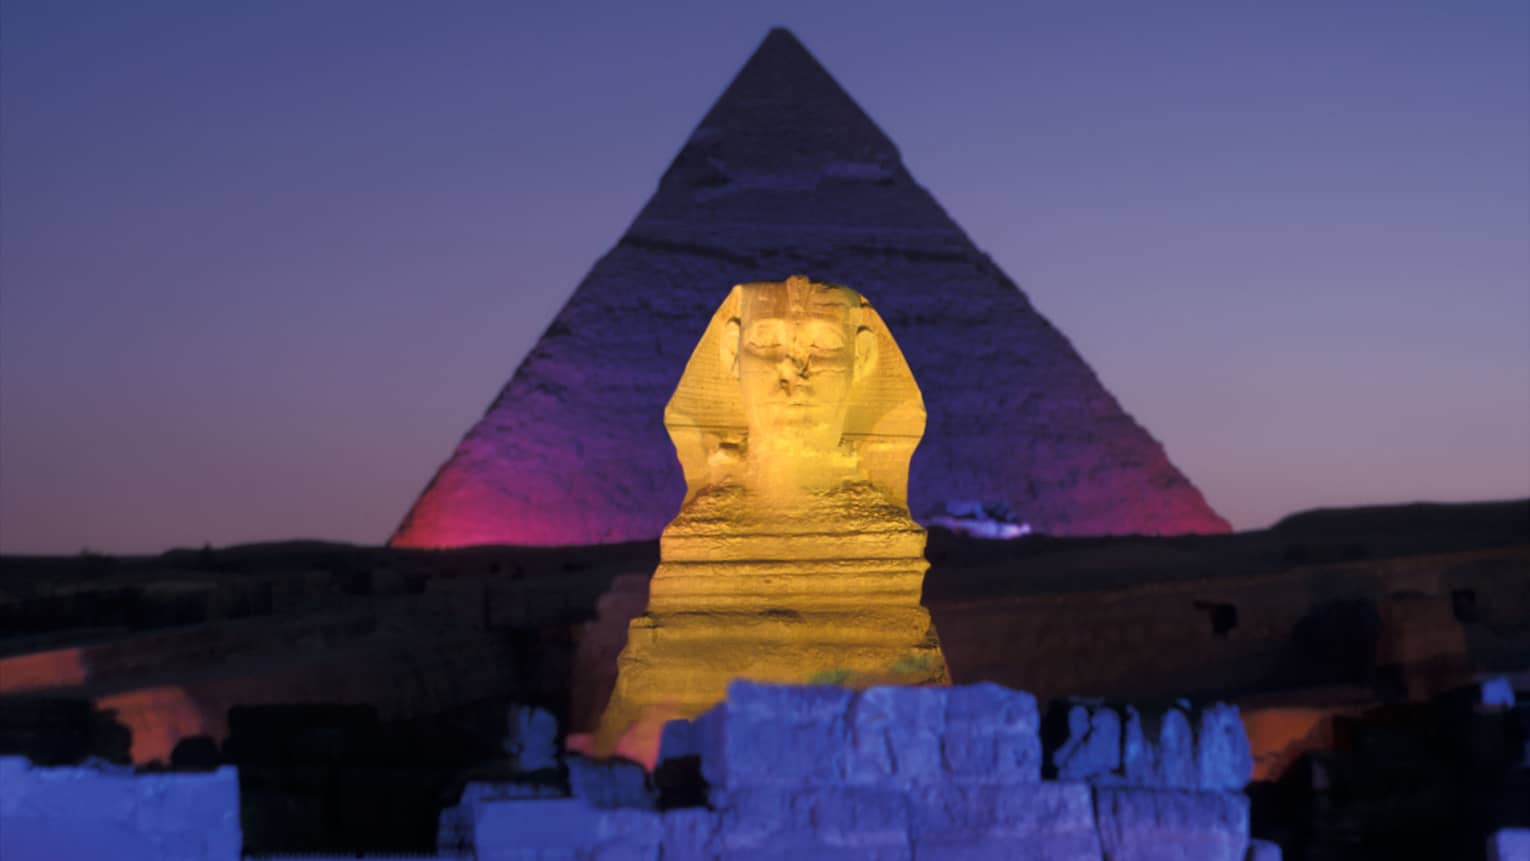 Sphinx and pyramid night light show Egypt